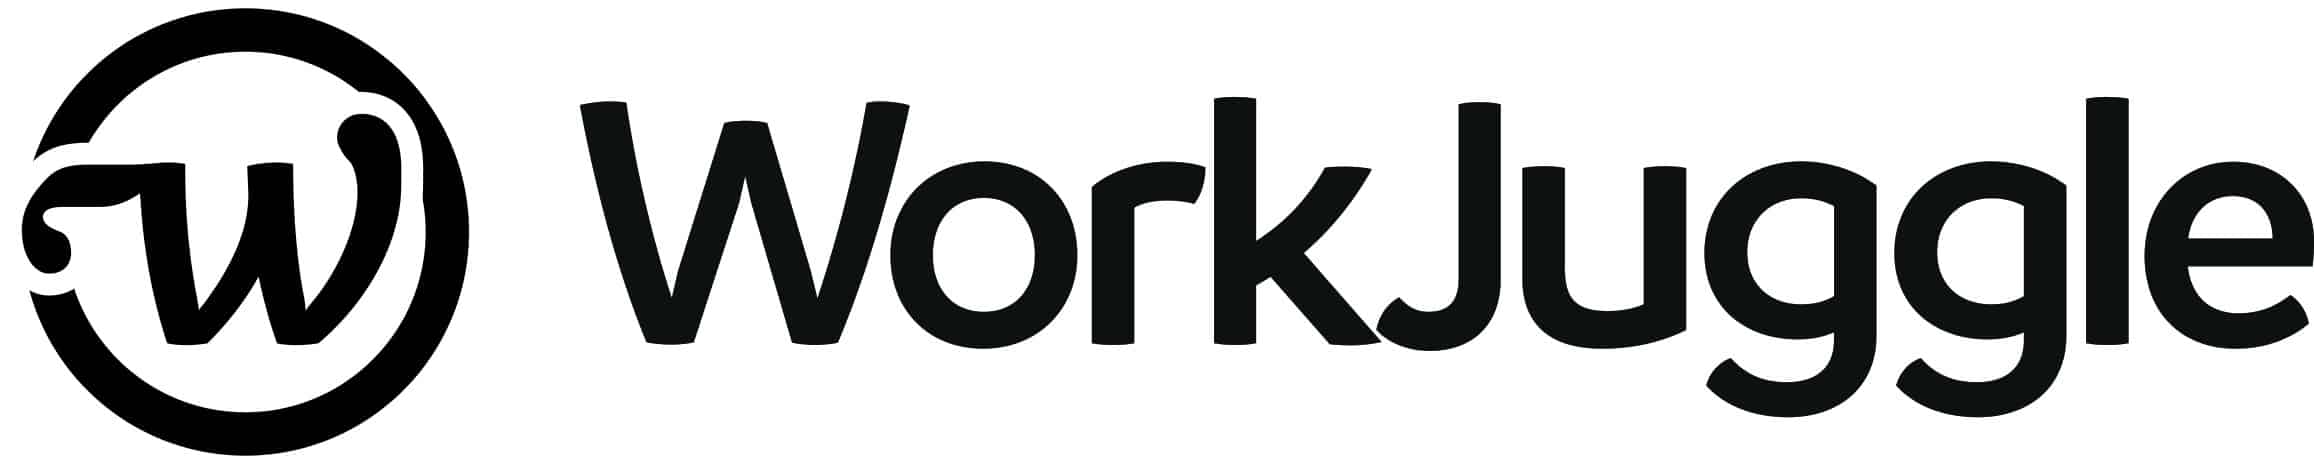 Large Workjuggle Logo